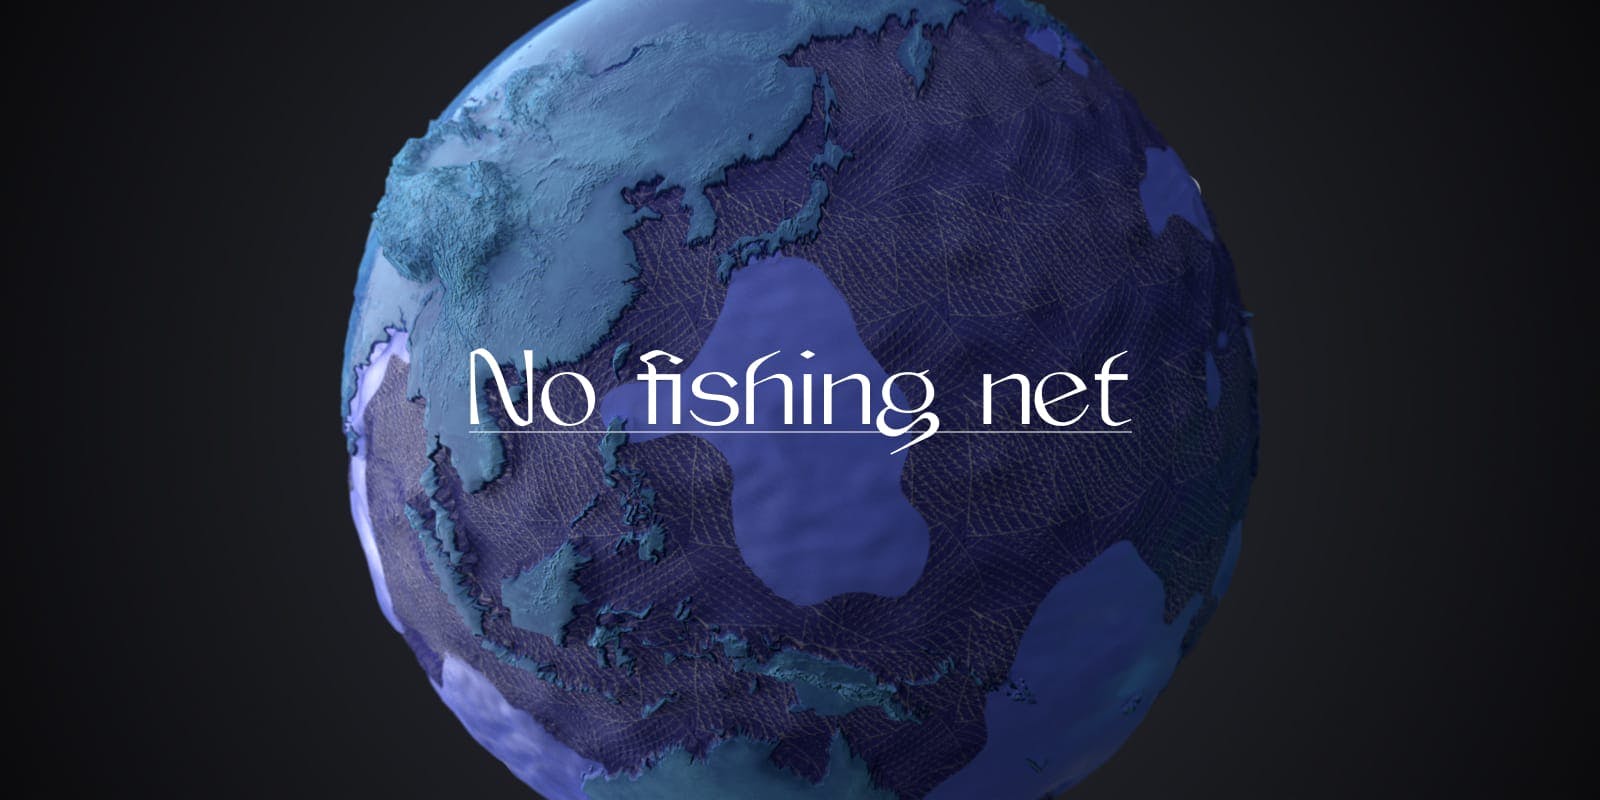 Sea Shepherd - No fishing net - Makemepulse